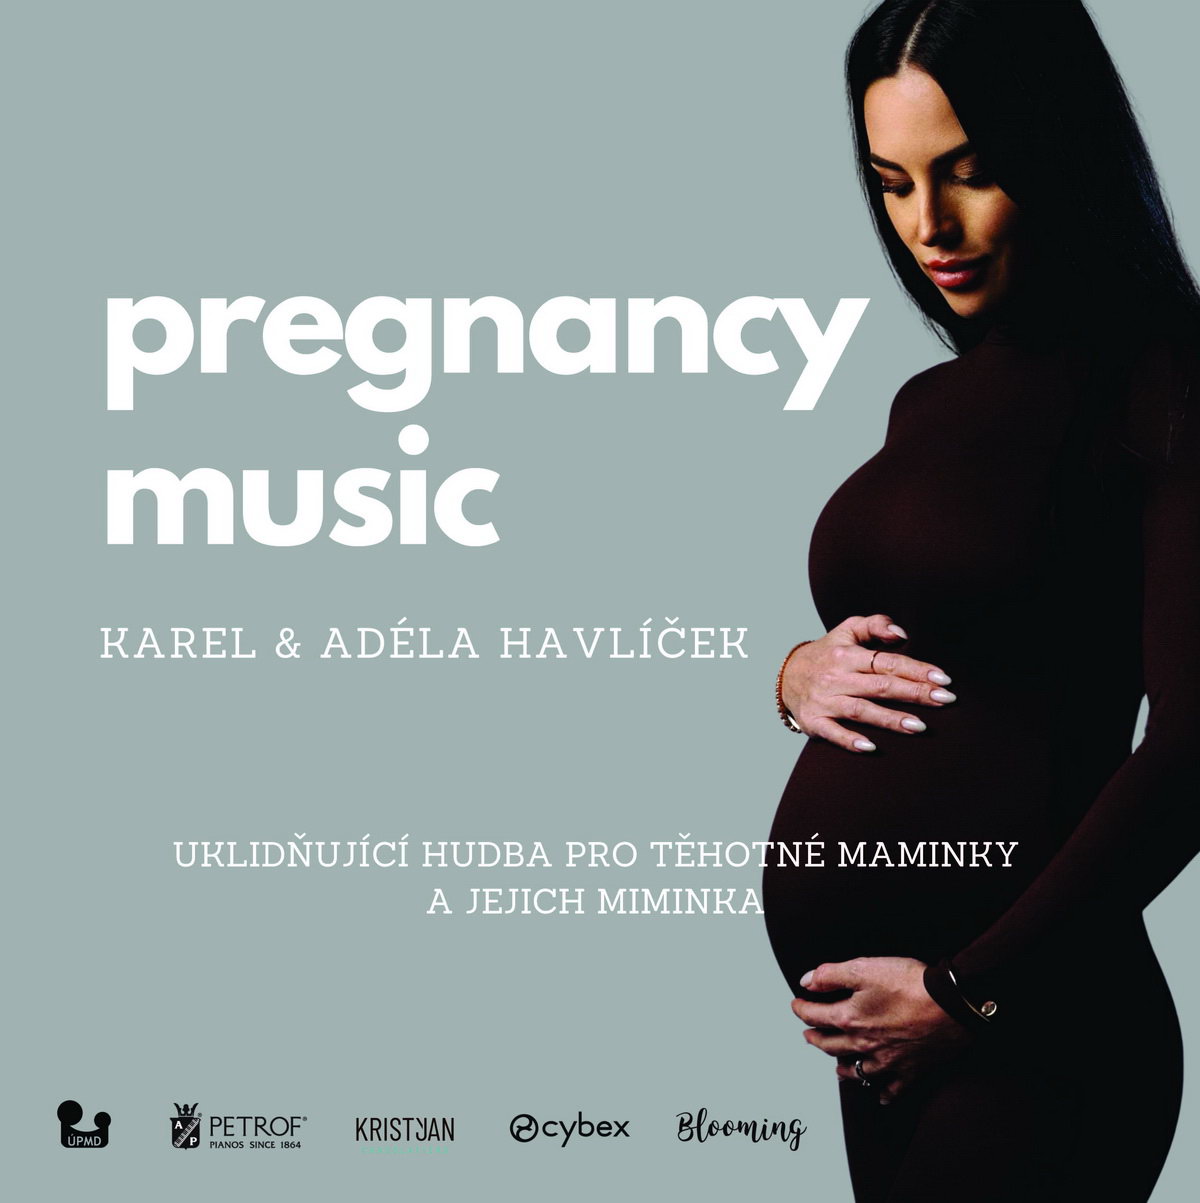 Vychází nová deska hudebníka Karla Havlíčka – Pregnancy Music